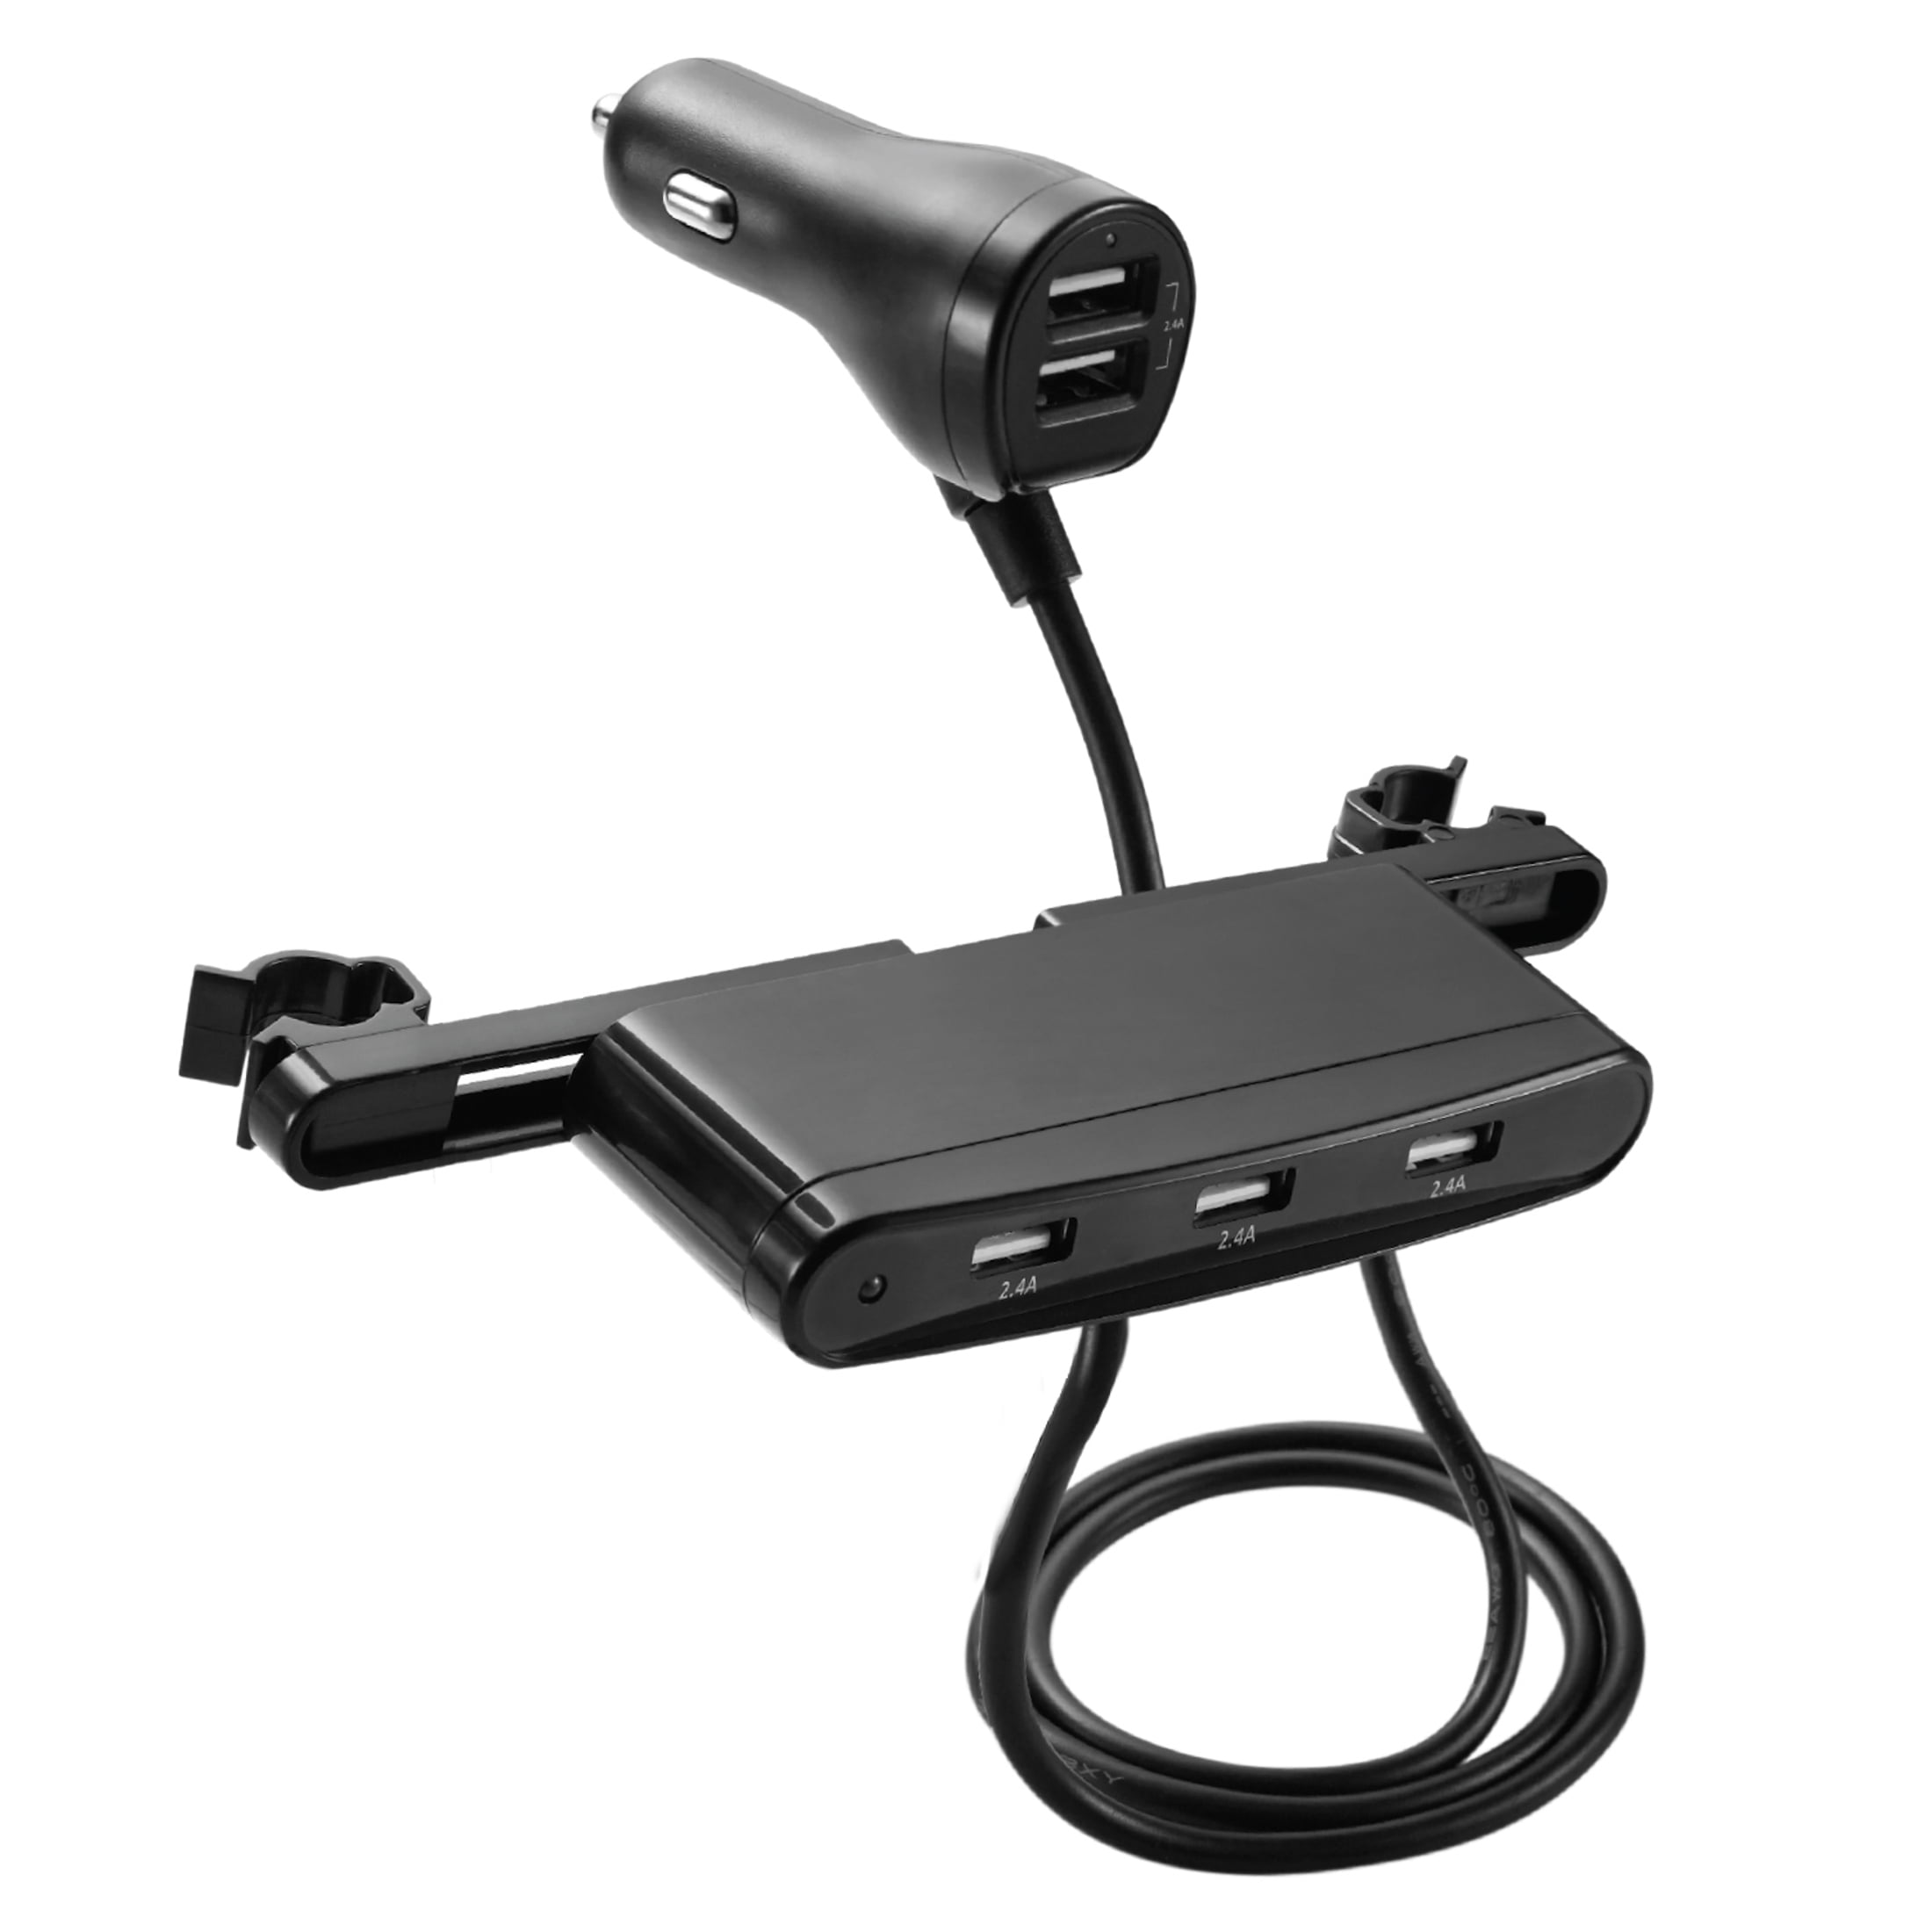 Premier Accessory Group Premier Headrest Mount 5-Port USB Charger 5.5ft Cord for Phones, Tablets, Mobile Devices